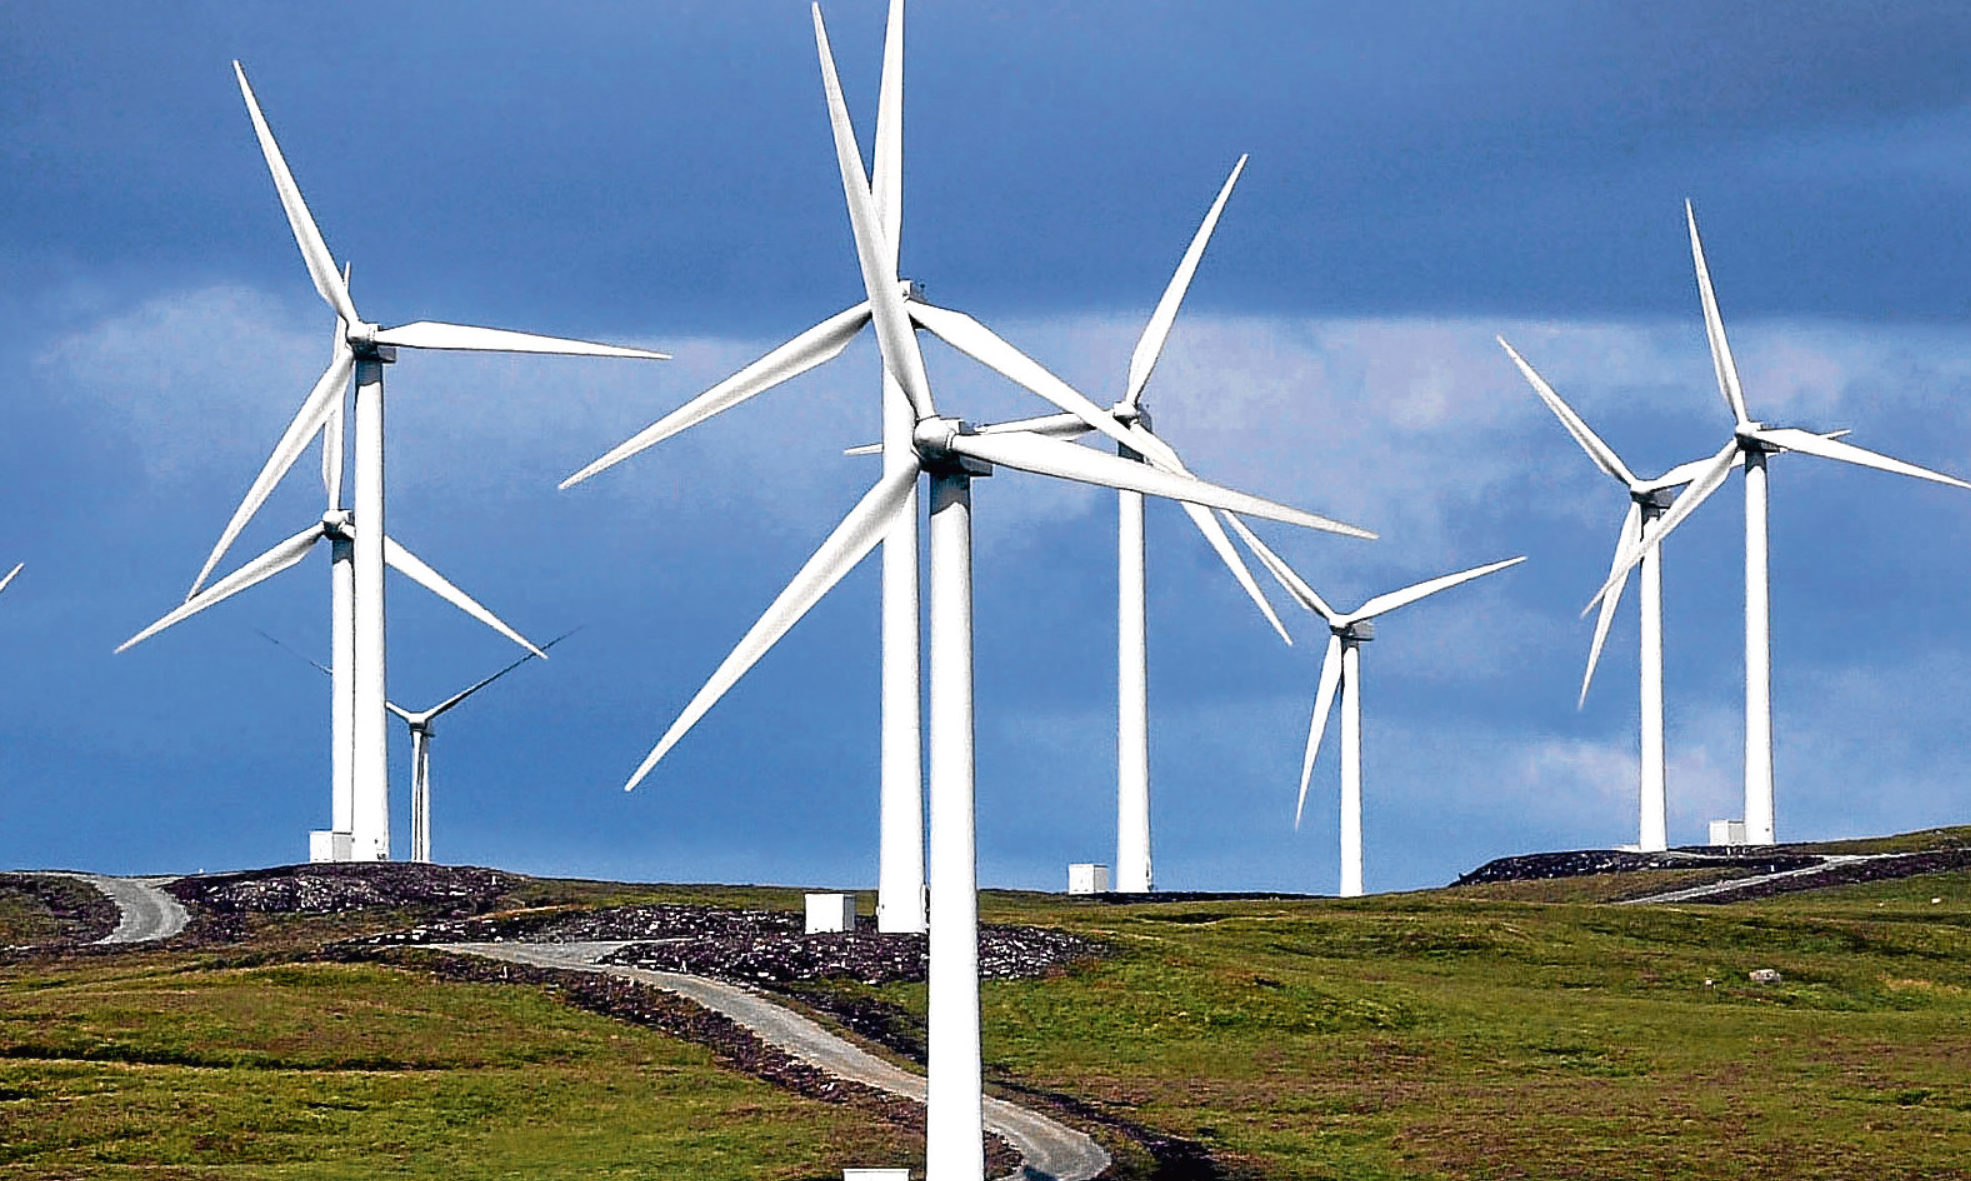 Wind turbines in operation in Scotland.